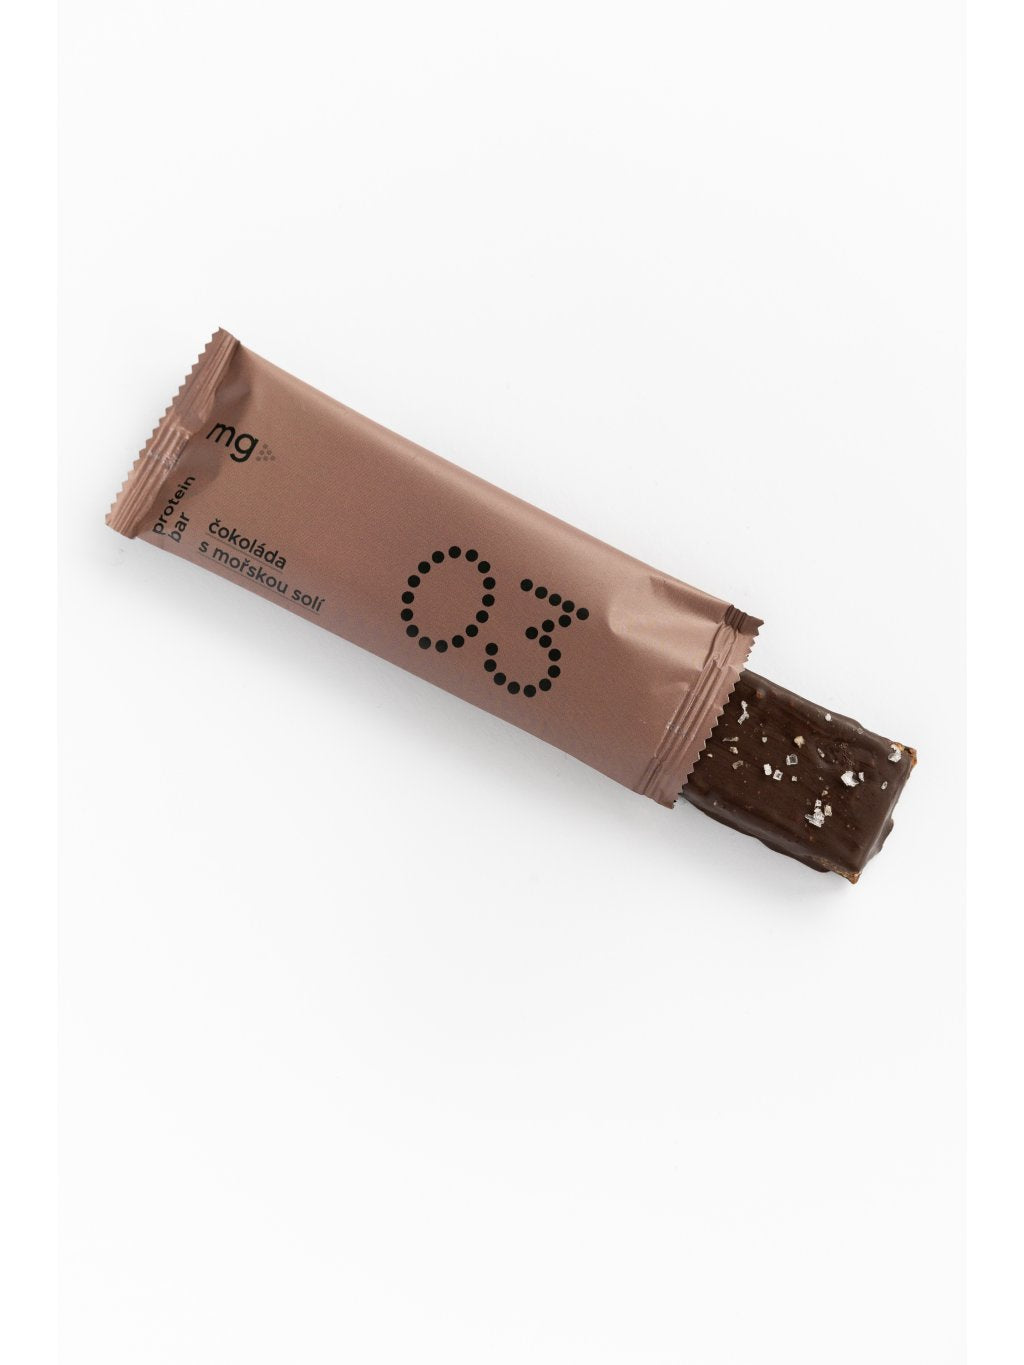 MG – Protein Bar 03 - Chocolate with Sea Salt